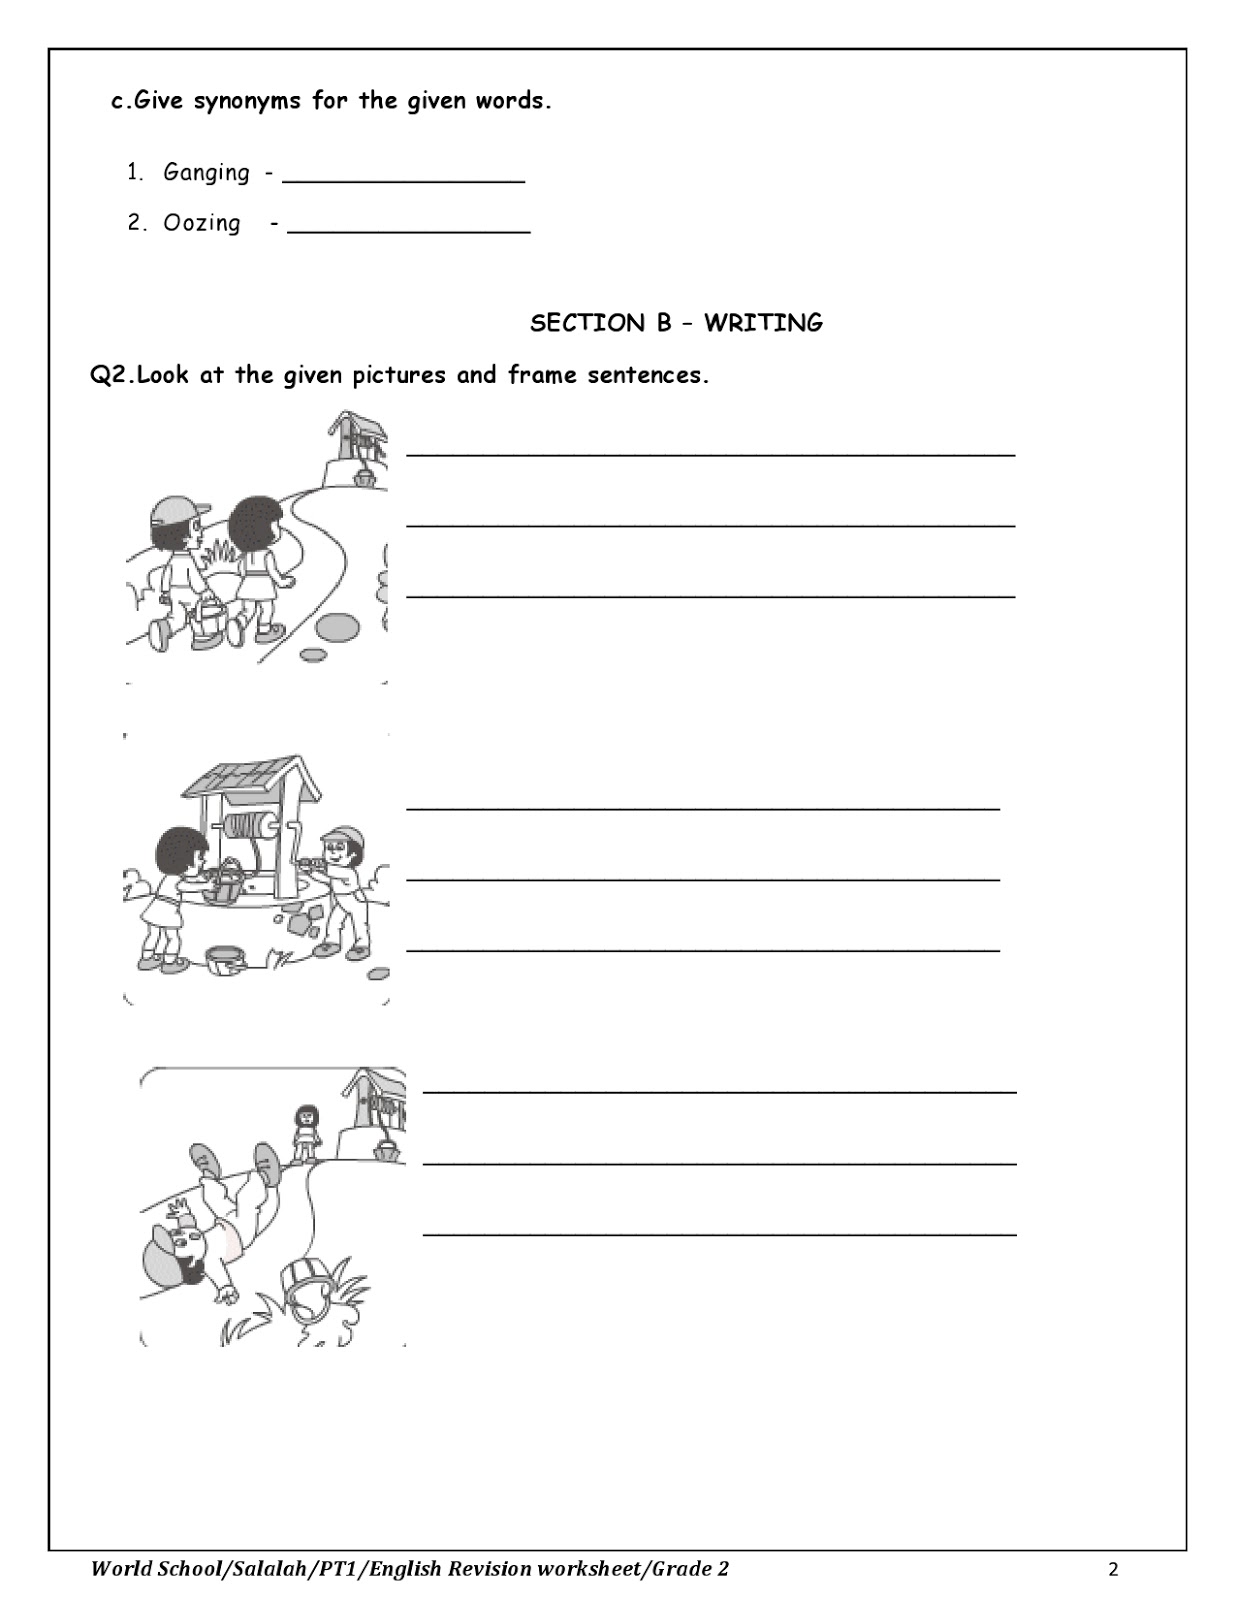 birla-world-school-oman-revision-worksheet-for-grade-2-as-on-01-10-2019